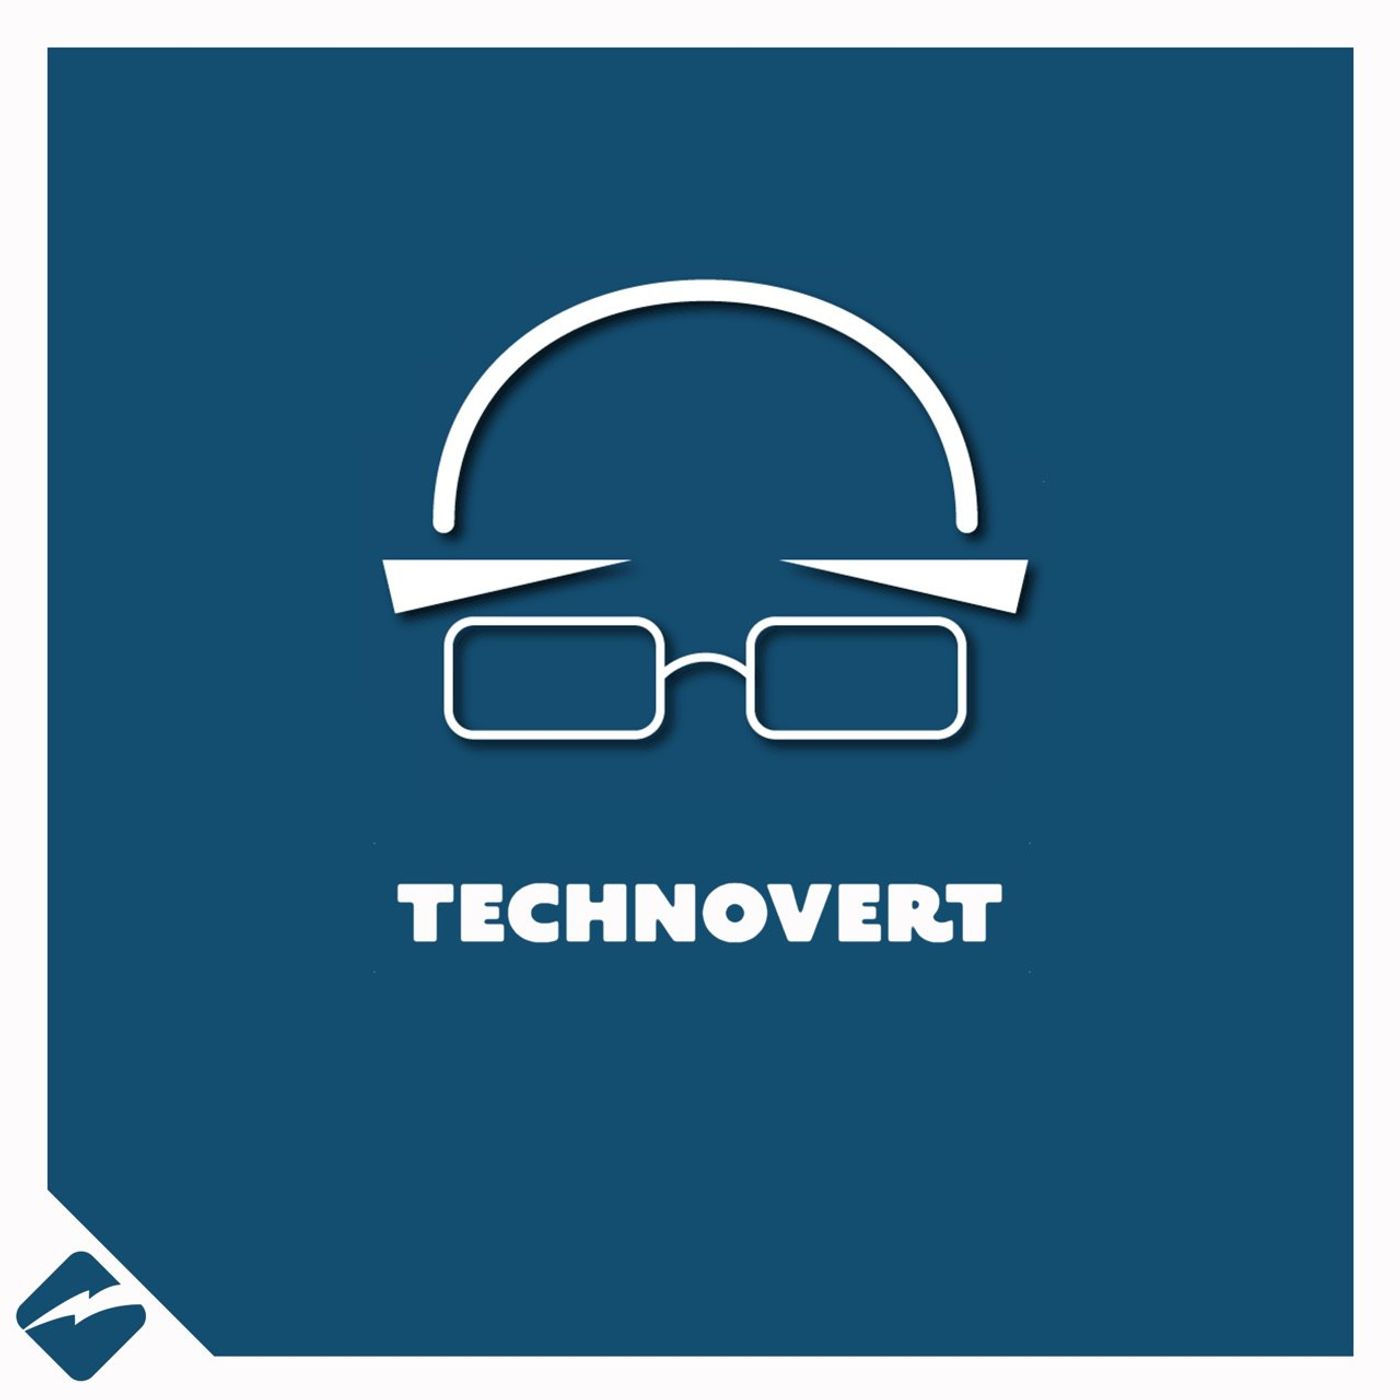 Technovert